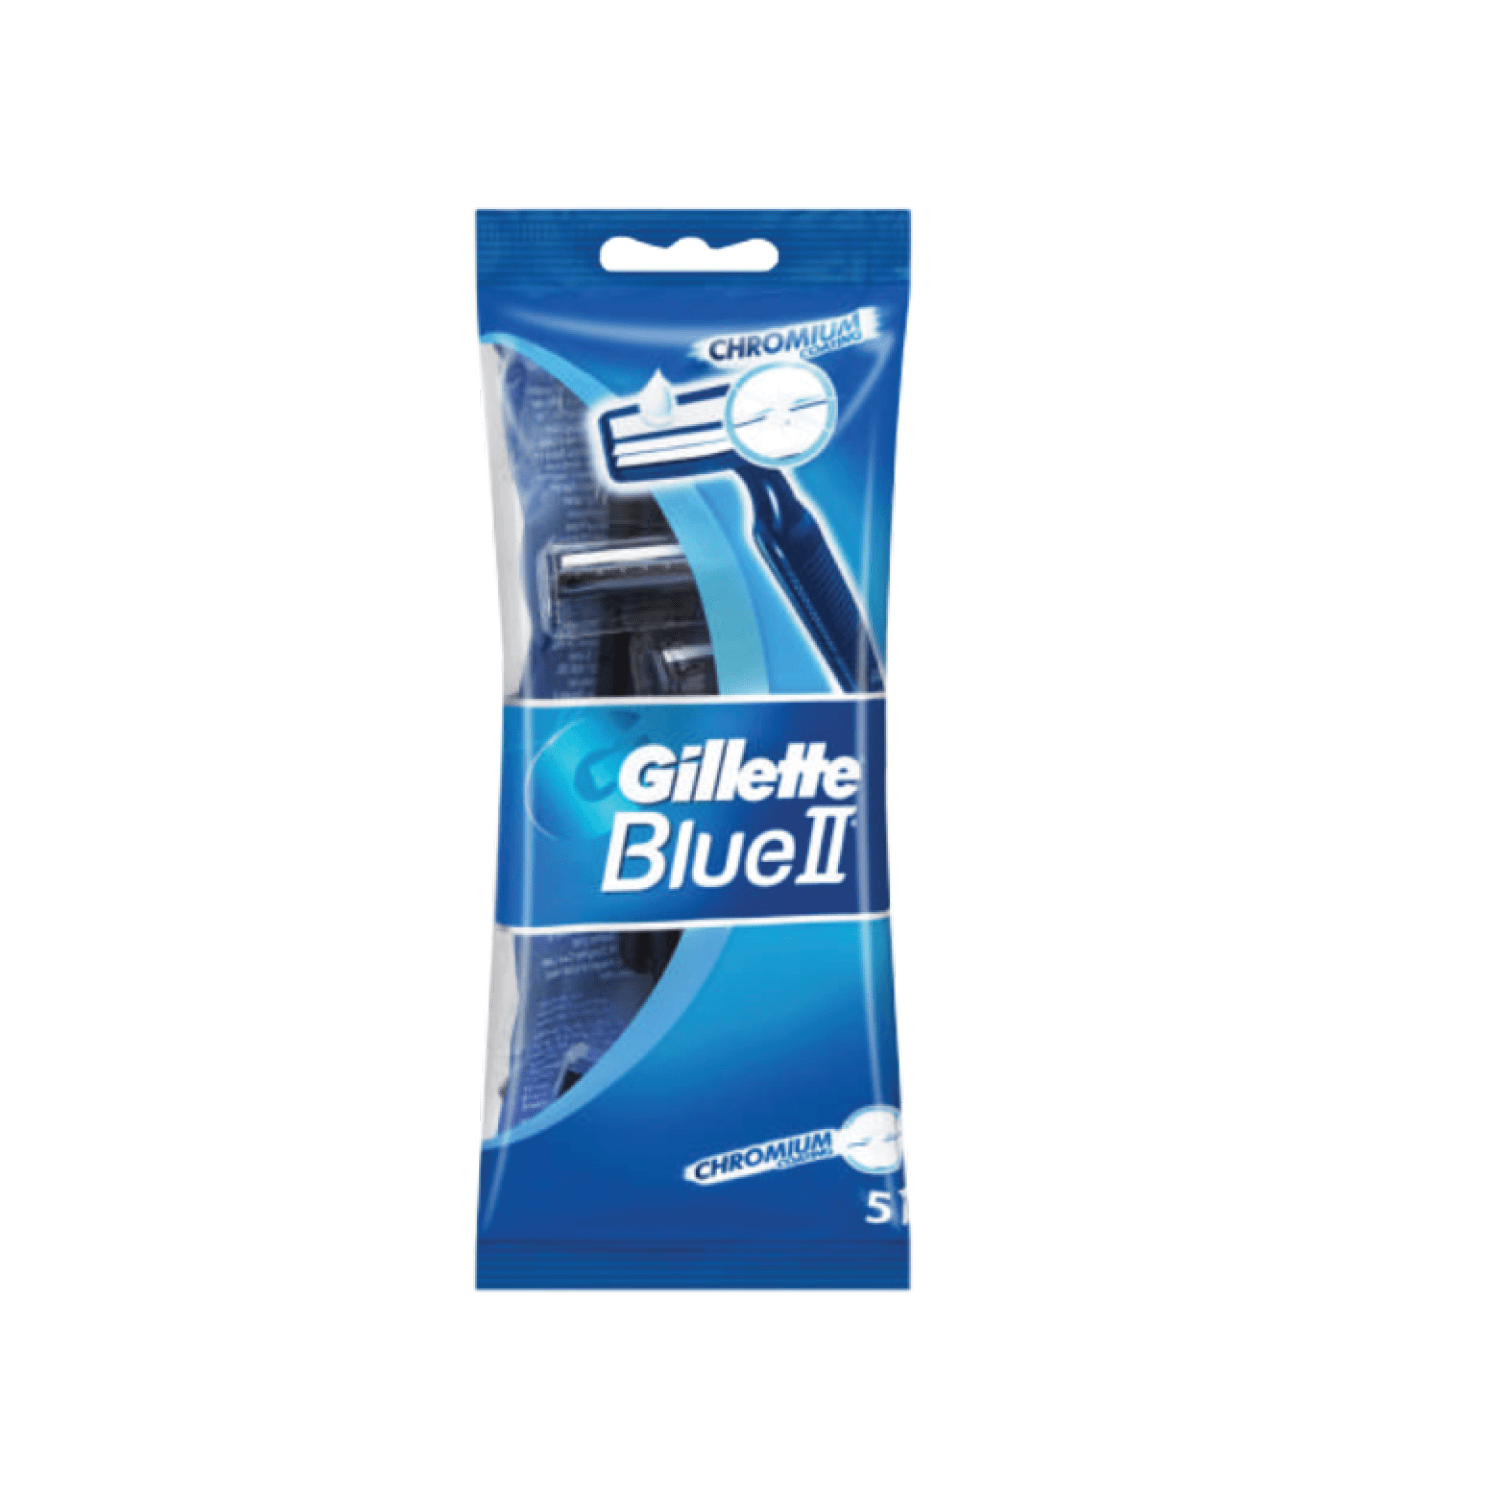 Gillette Toiletries Gillette Blue II Disposable Razors, 5's 7702018849031 101303